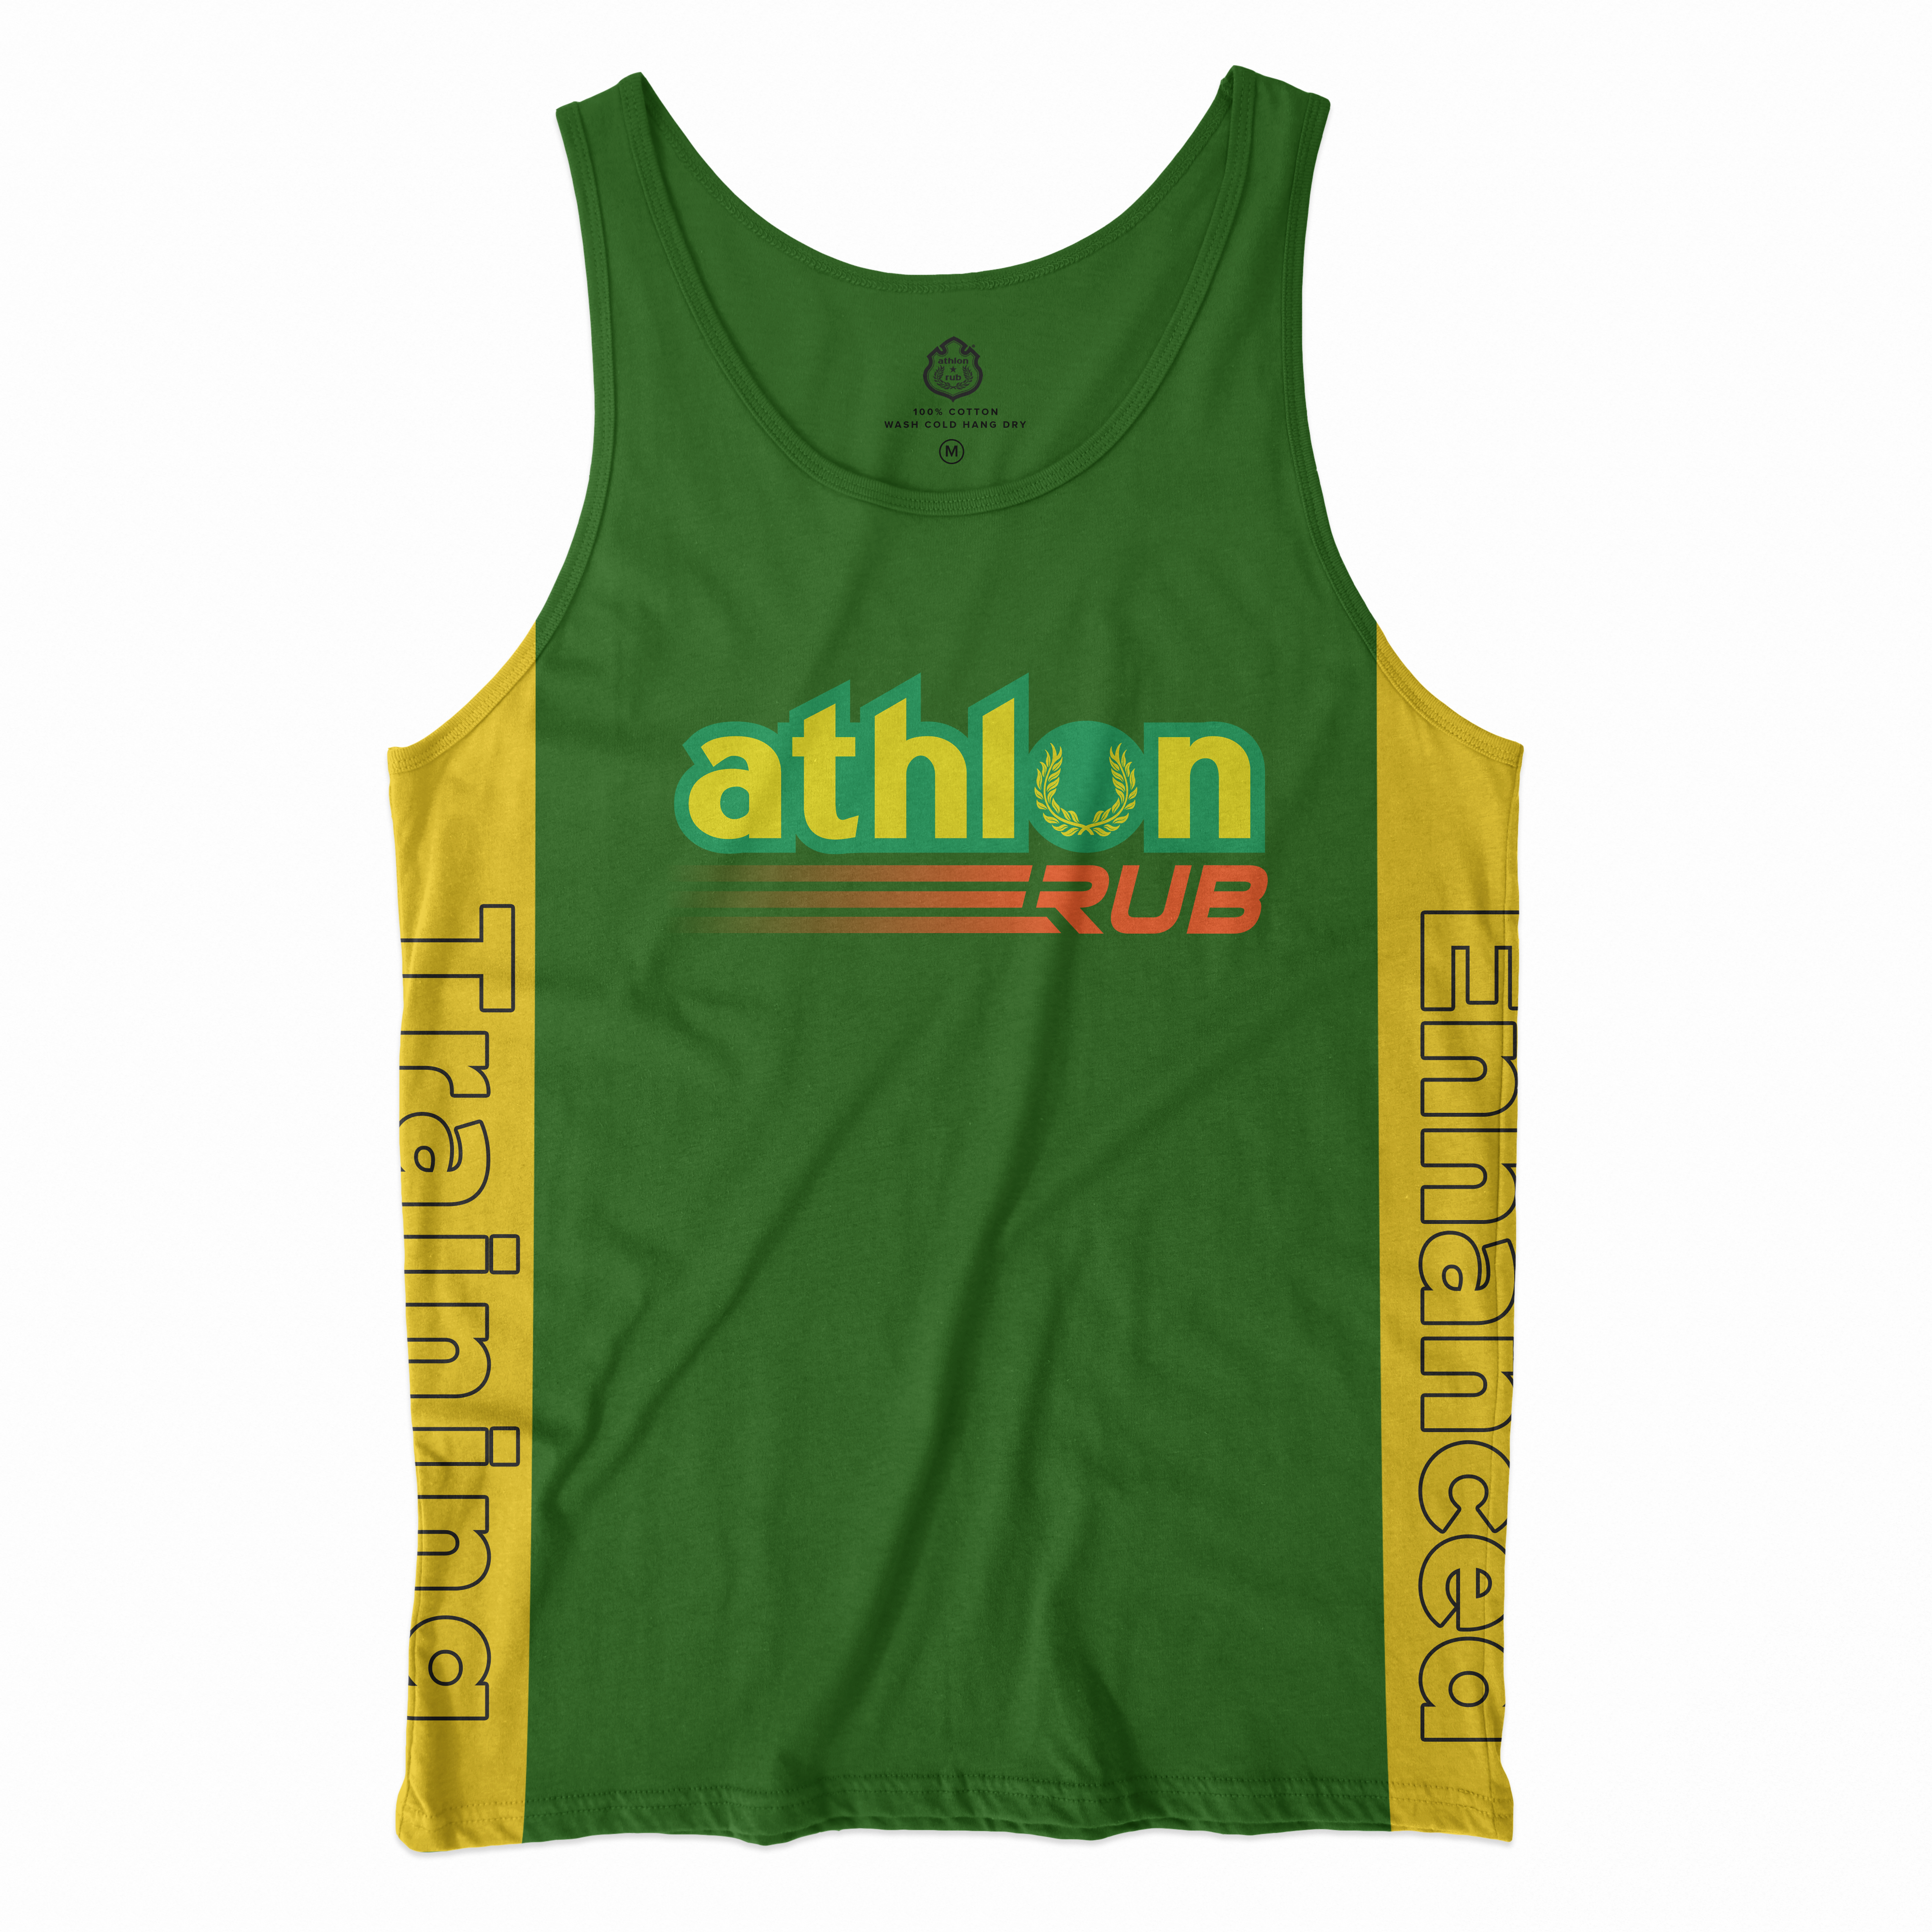 Athlon All Sports Rub Dry-Fit  Jersey - Green w Yellow